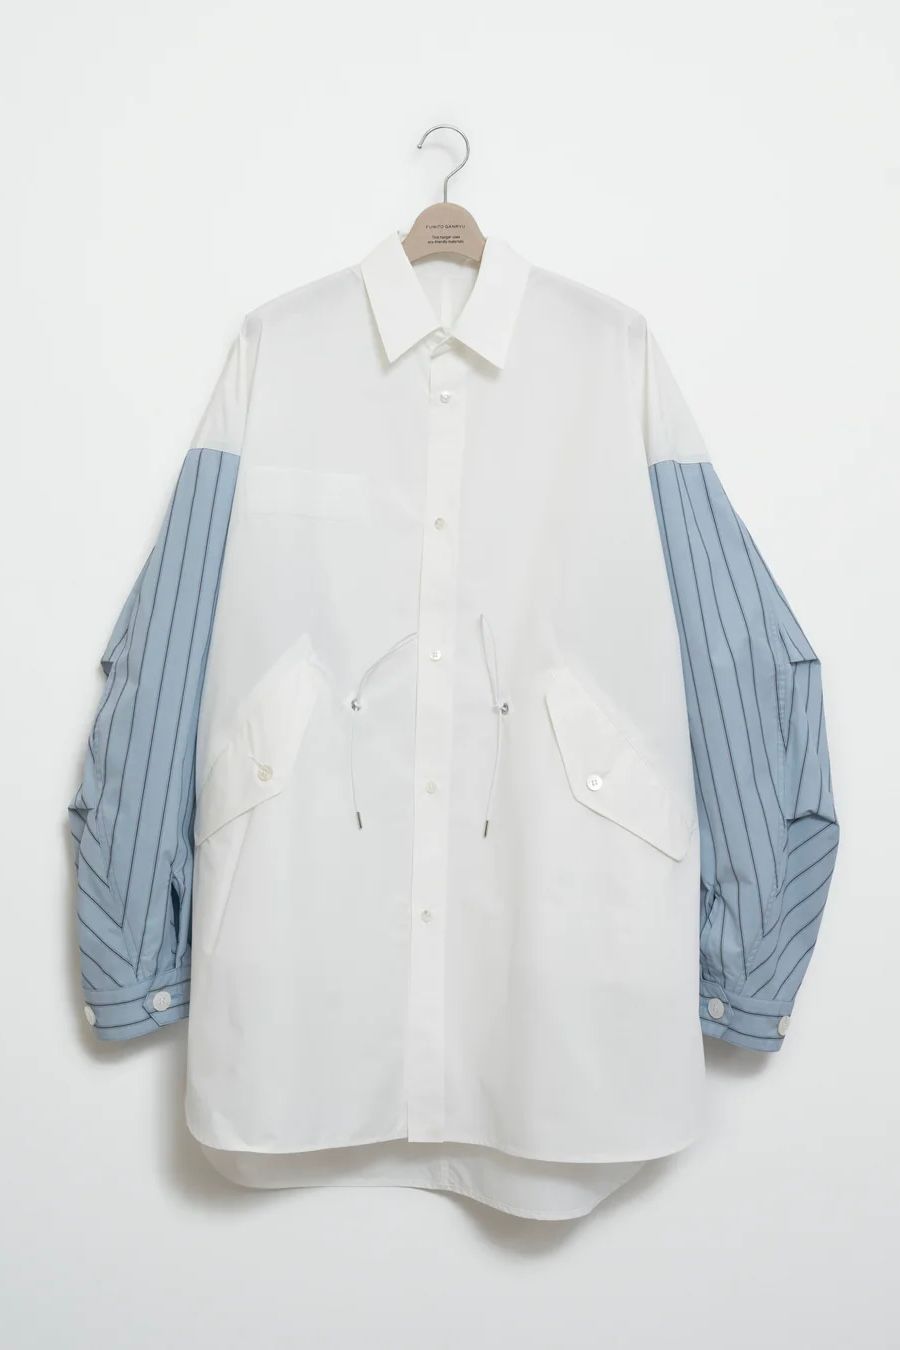 FUMITO GANRYU - m-51 cleric shirt jacket -white×blue stripe- 23ss